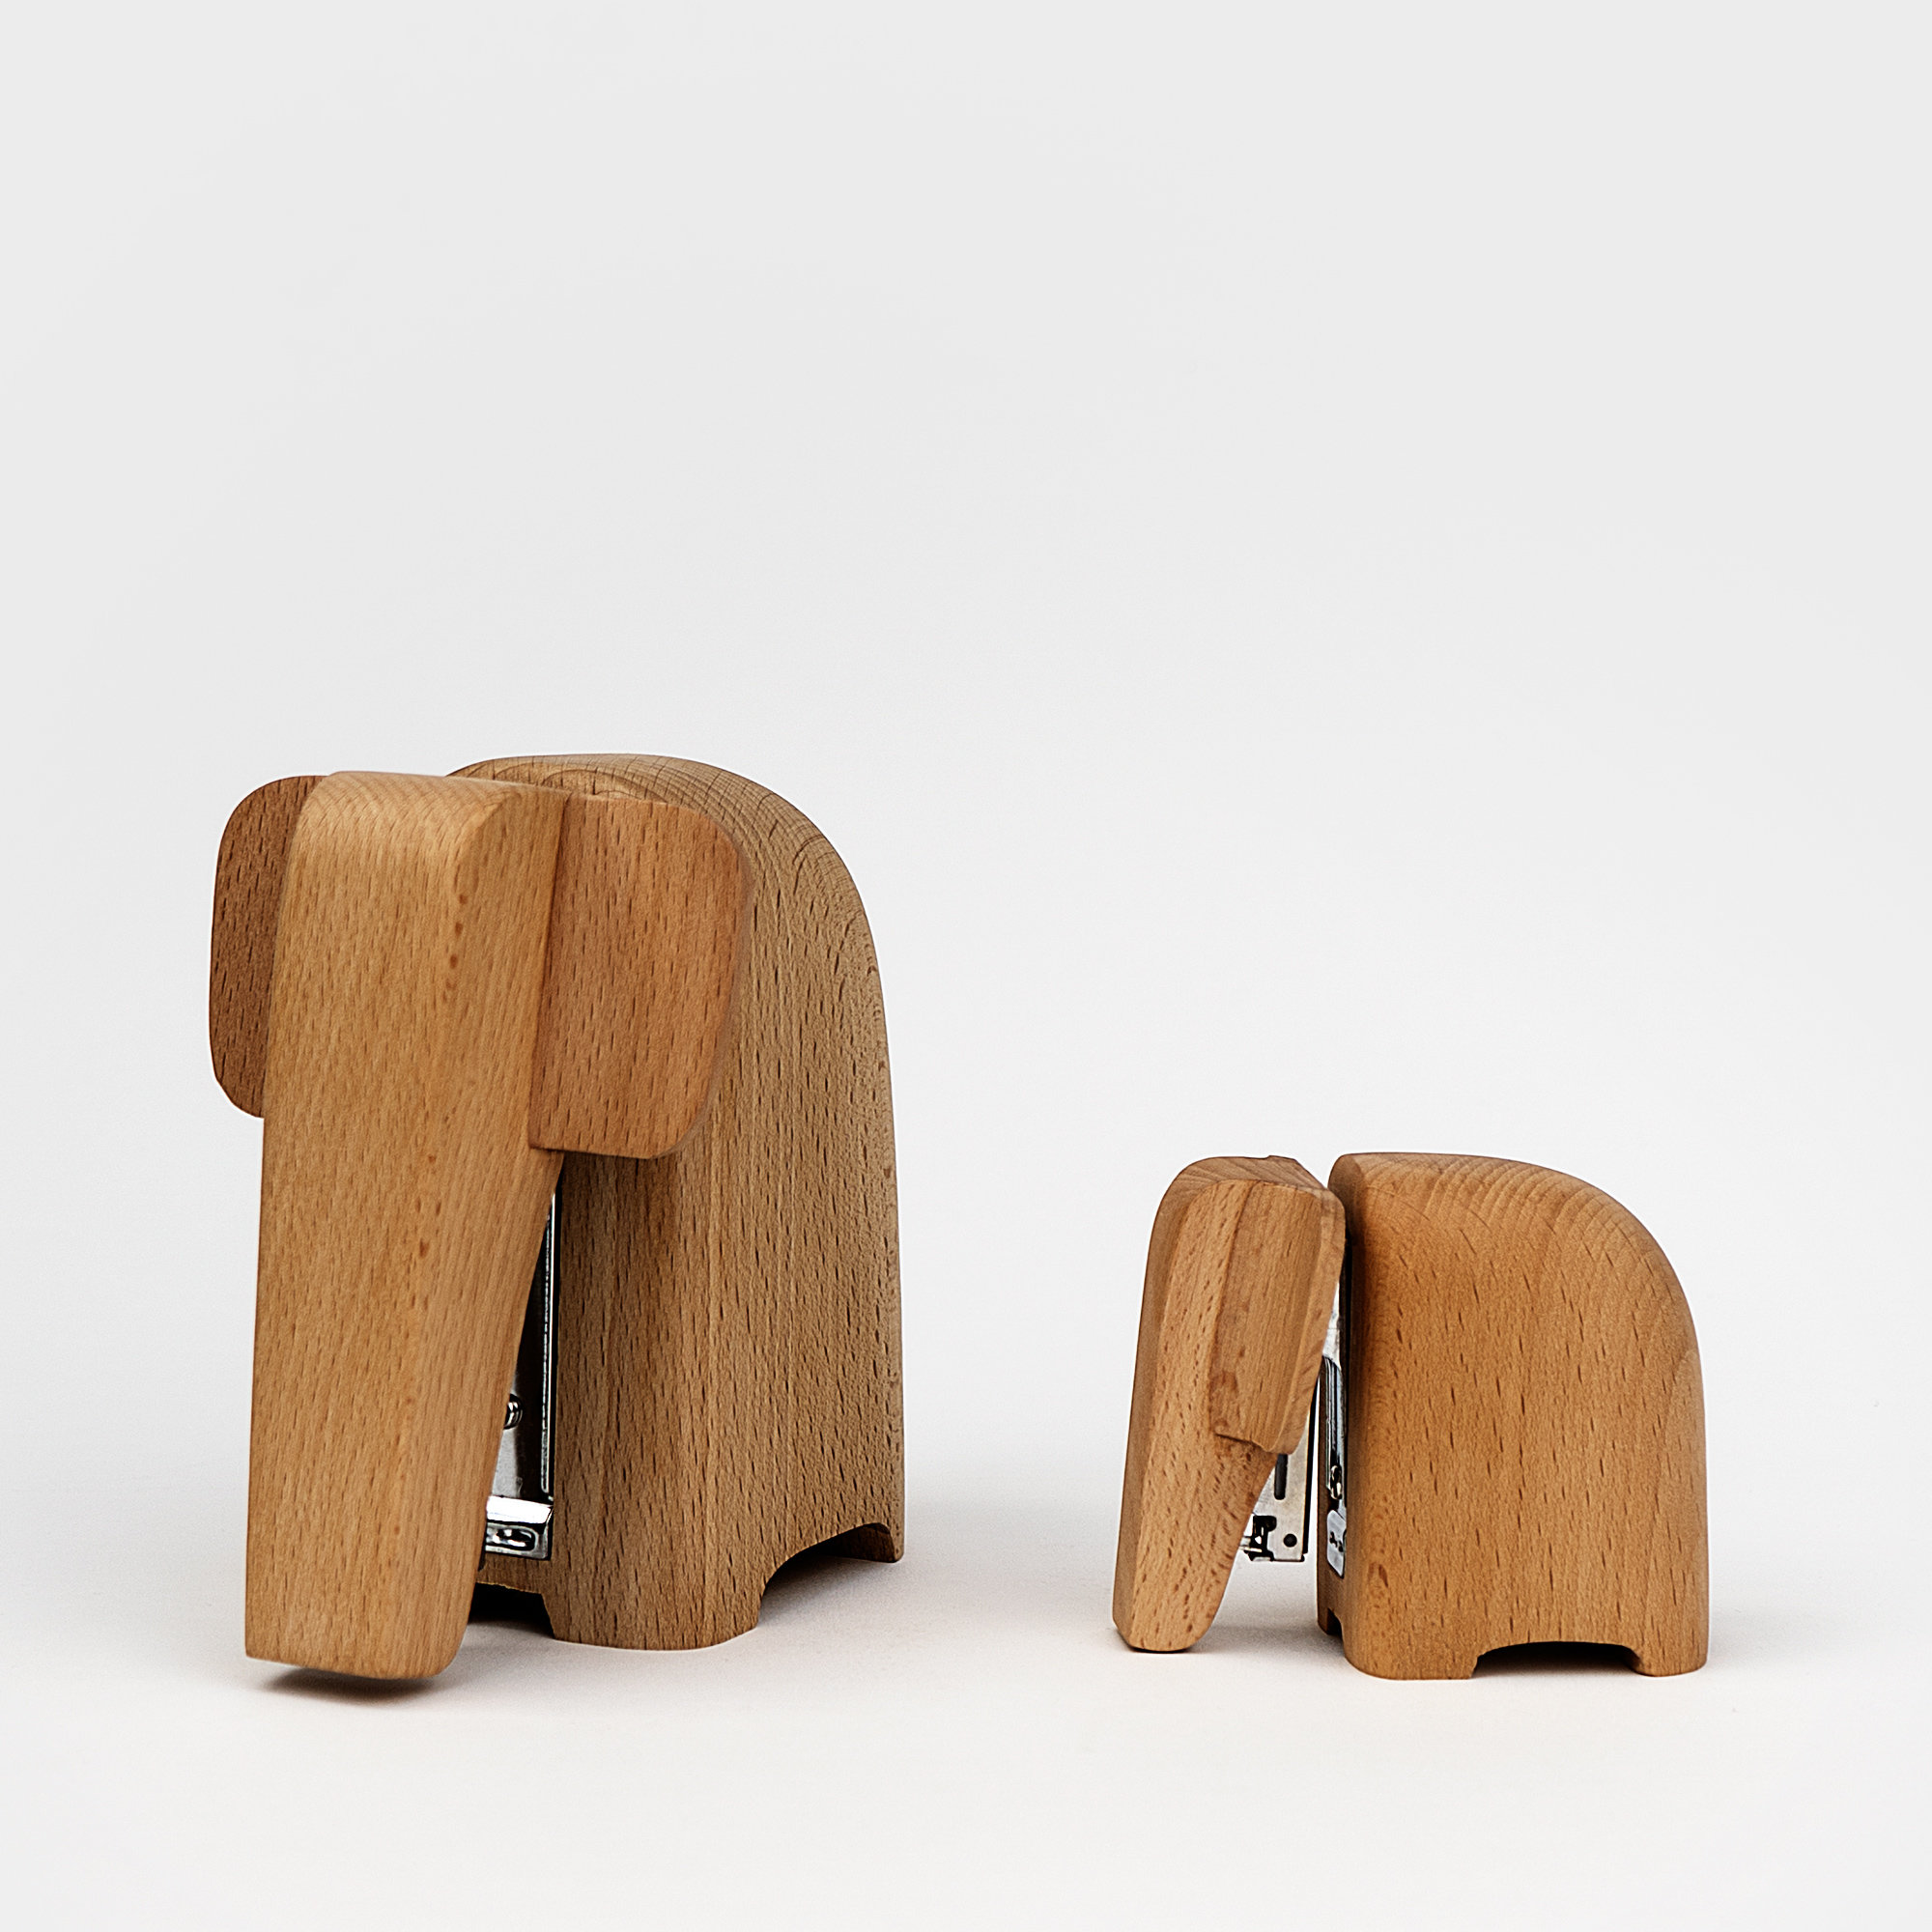 Pair of Wooden Elephant Staplers